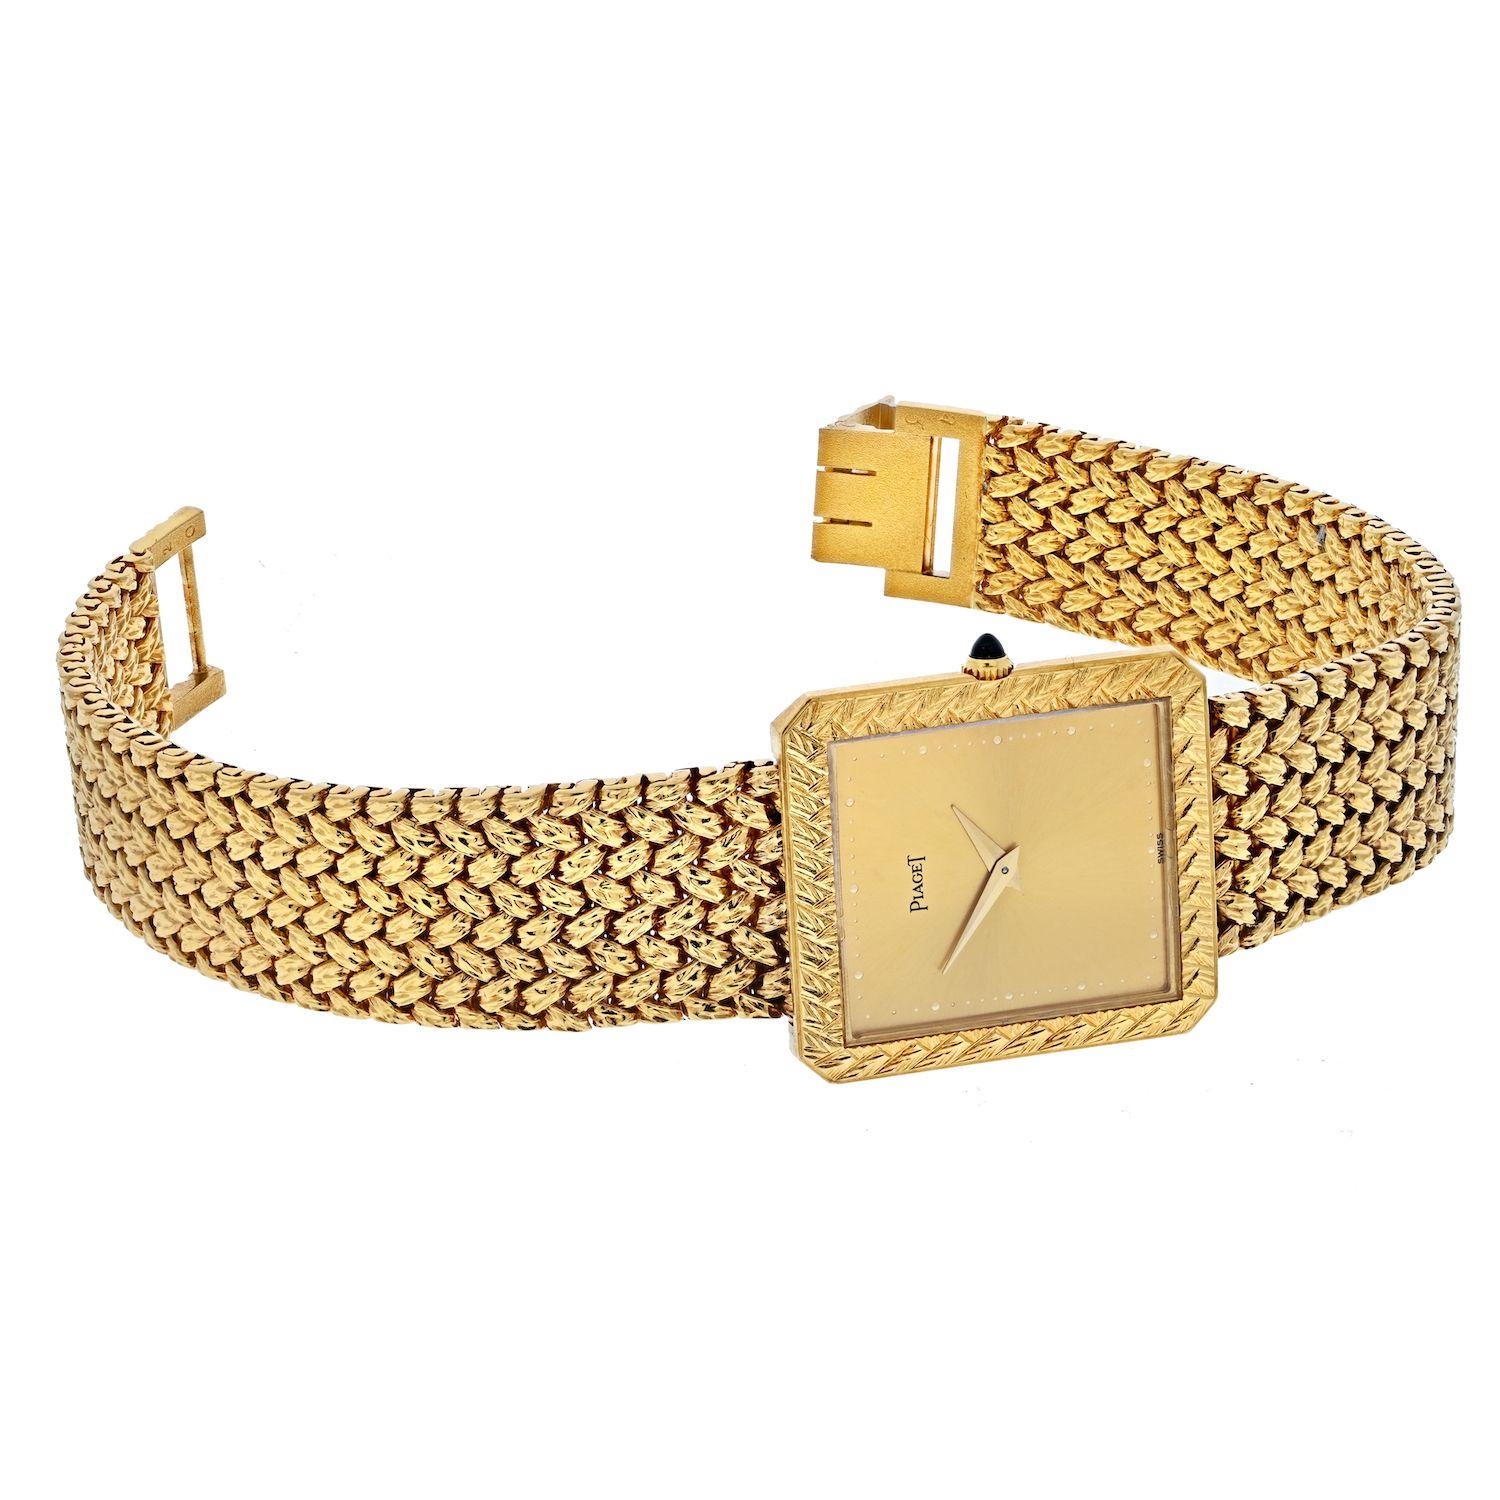 piaget vintage gold watch